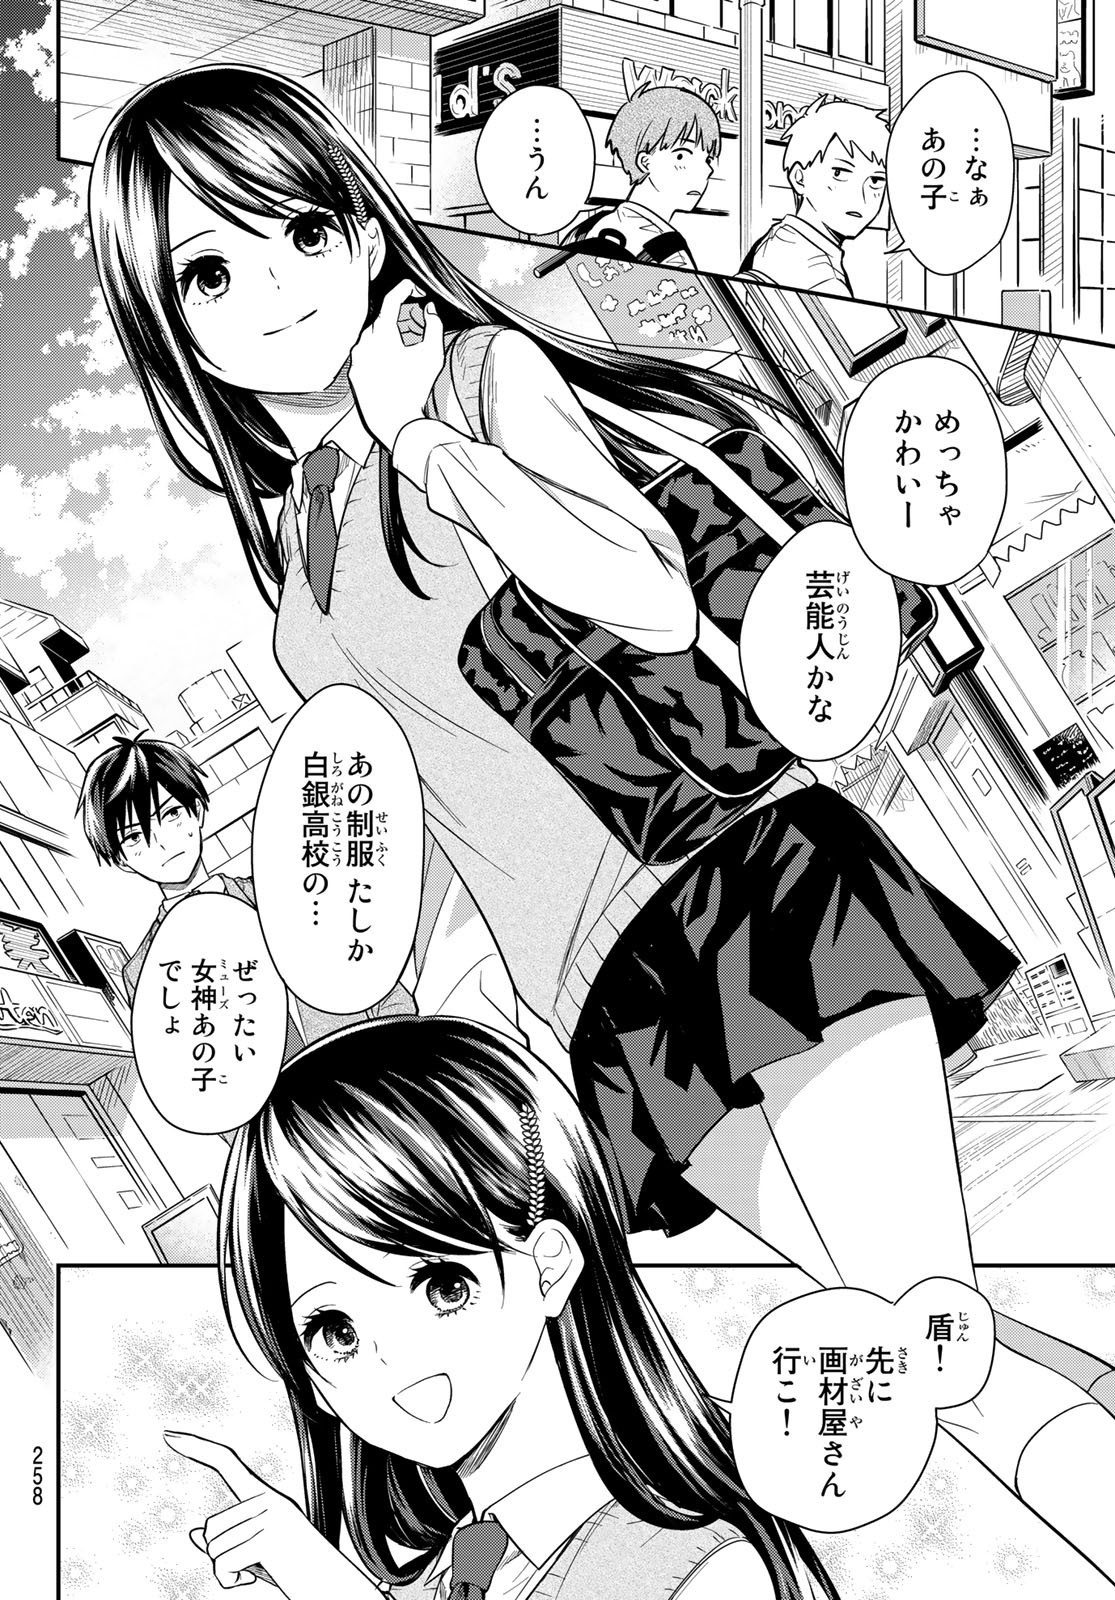 Kimi ga Megami Nara Ii no ni (I Wish You Were My Muse) - Chapter 015 - Page 2